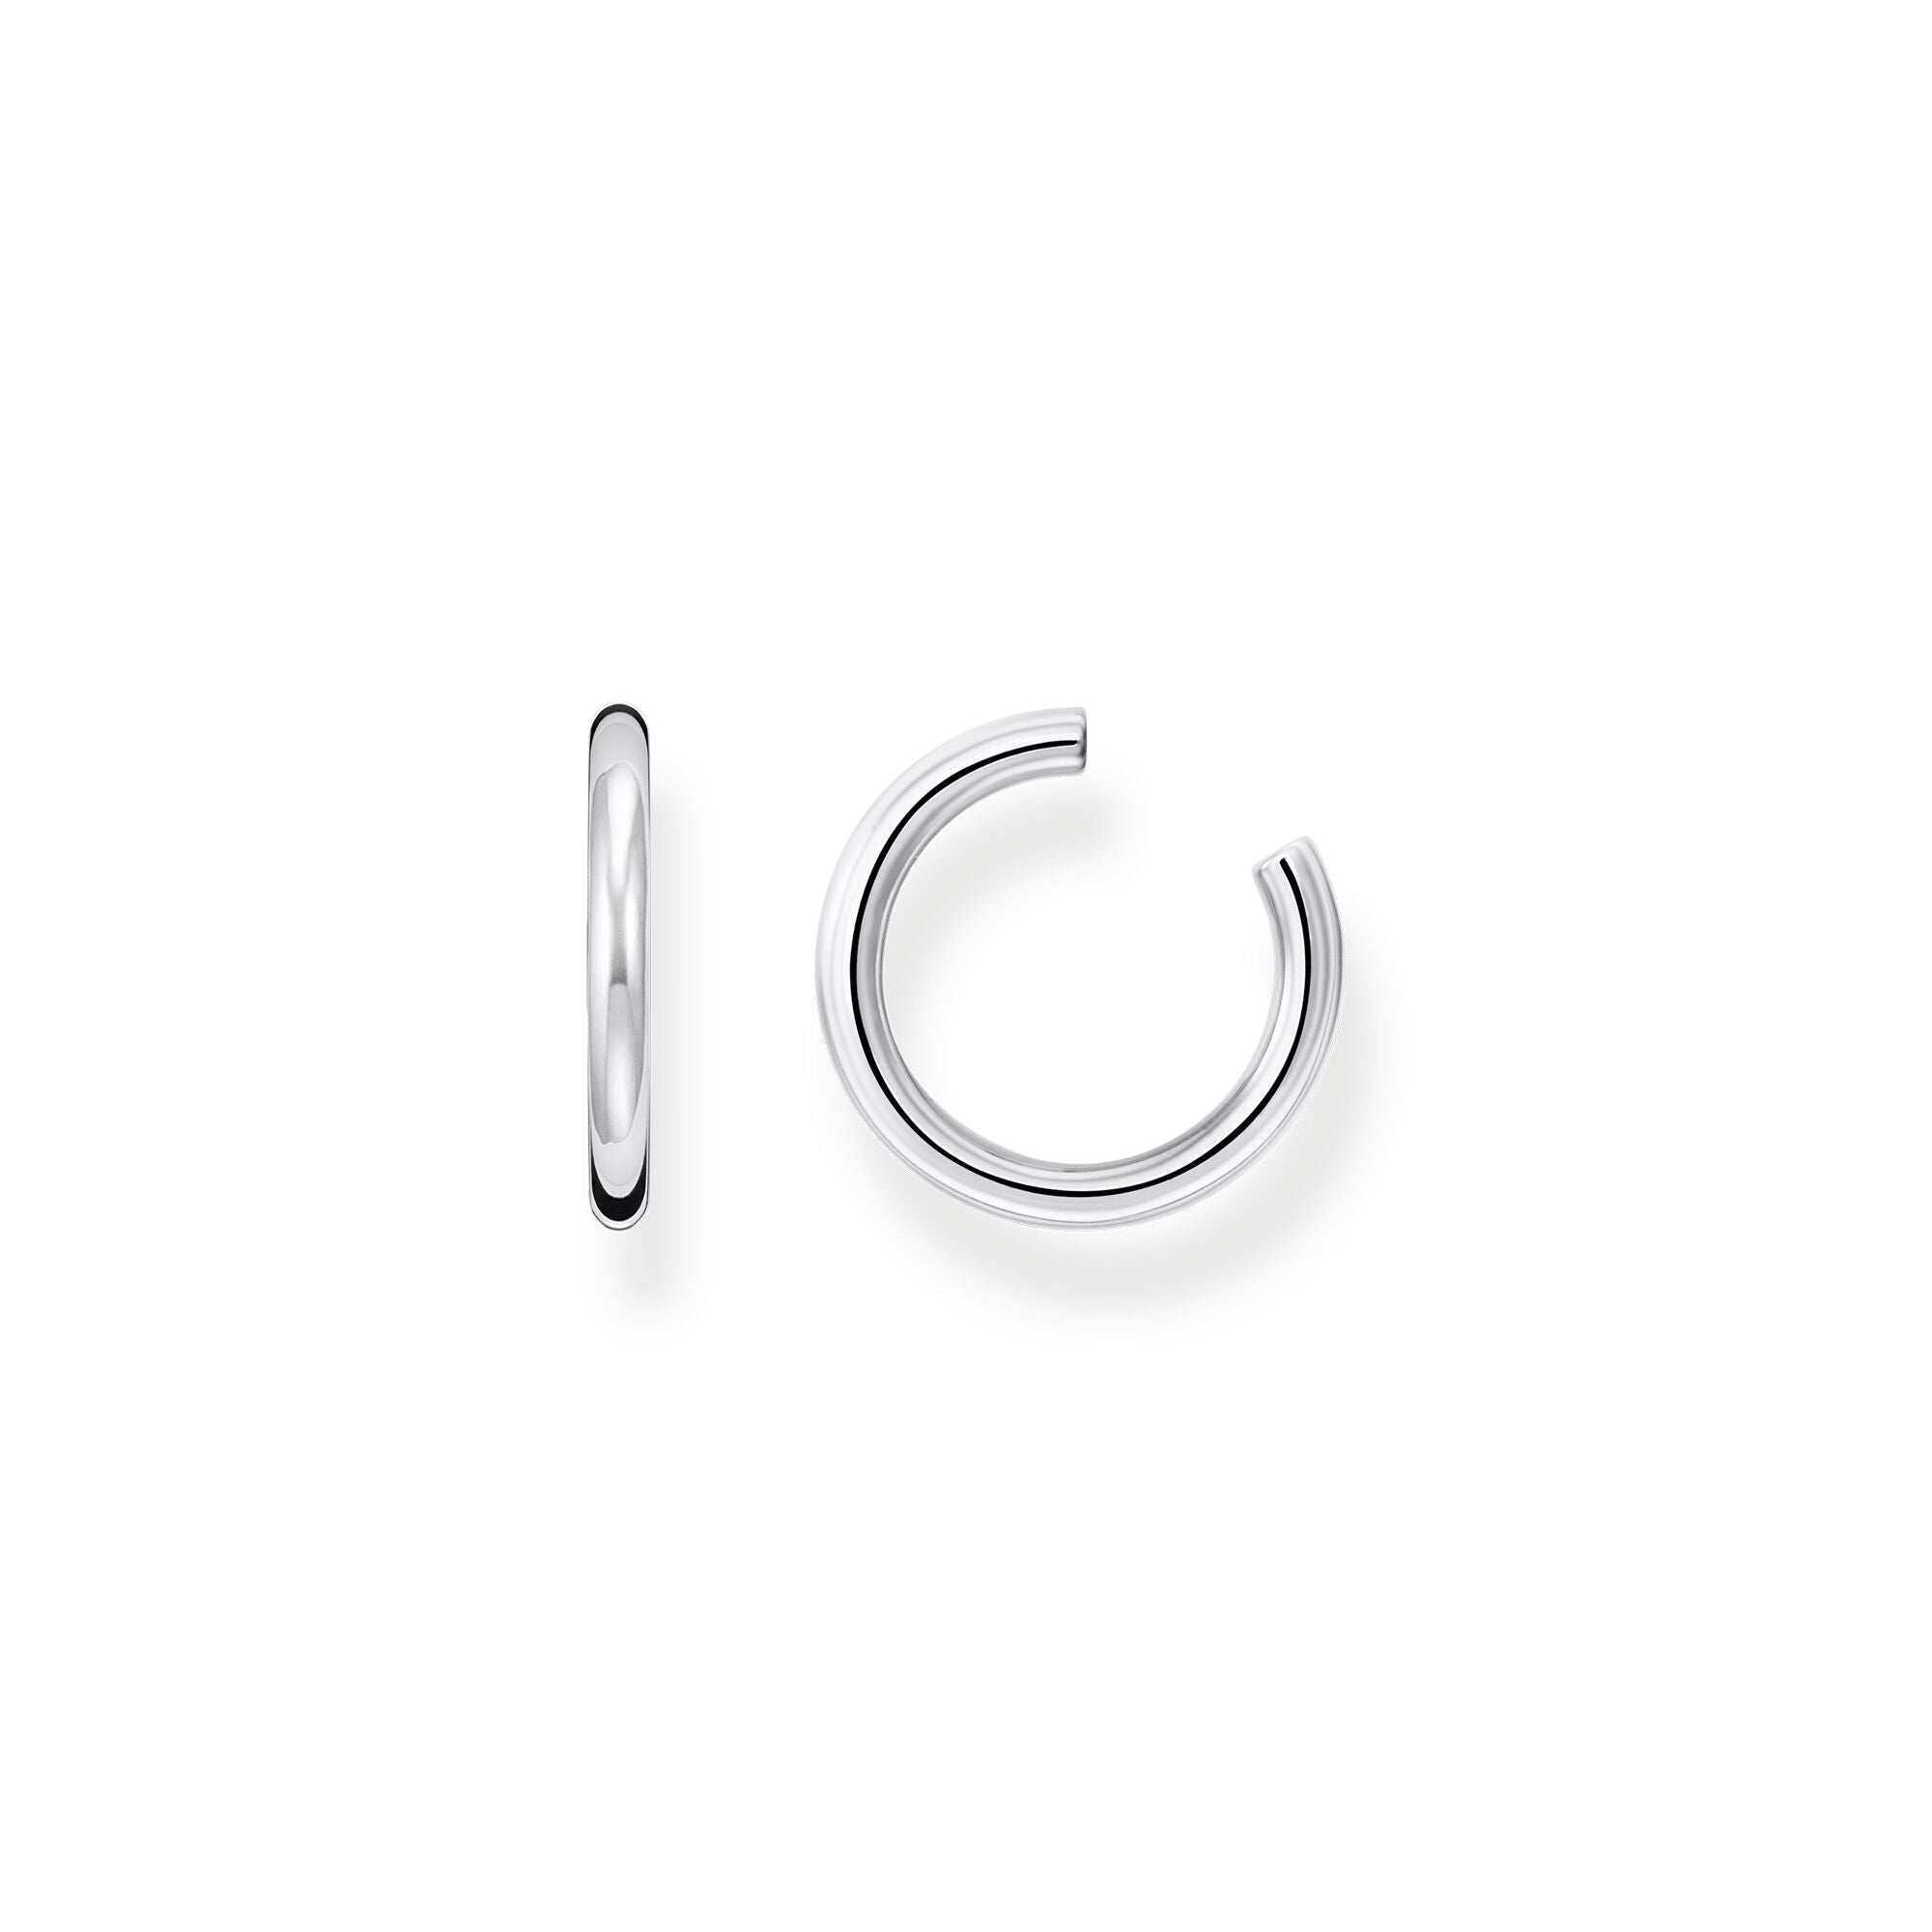 Thomas Sabo sterling silver plain ear cuff for non pierced ears.  Comes as a single earring